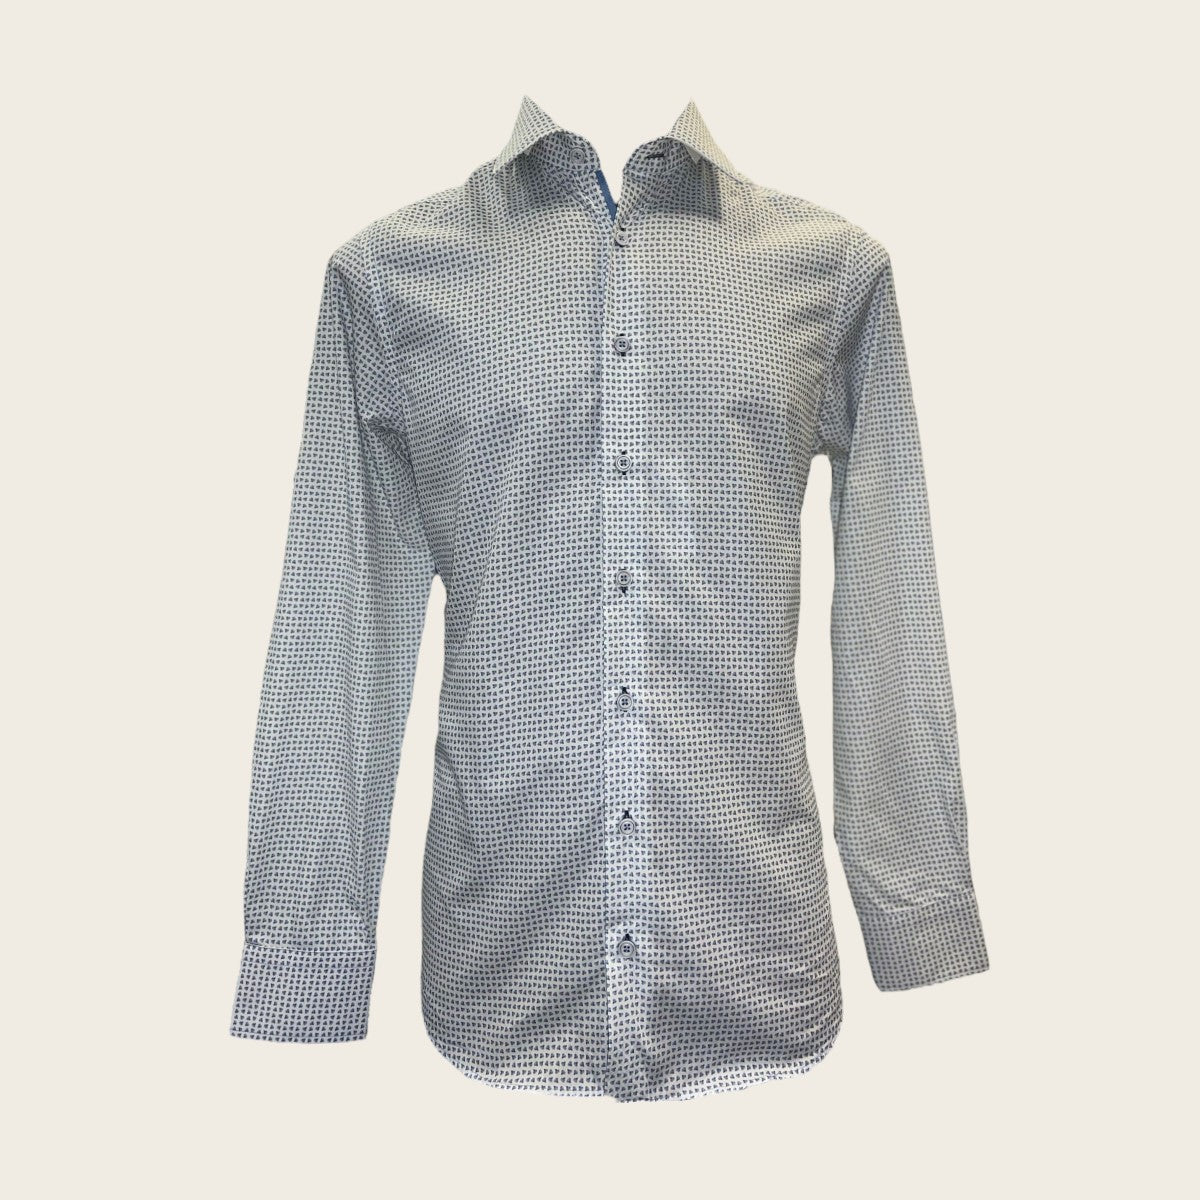 Grey print men shirt, with organic motifs in contrasting colors